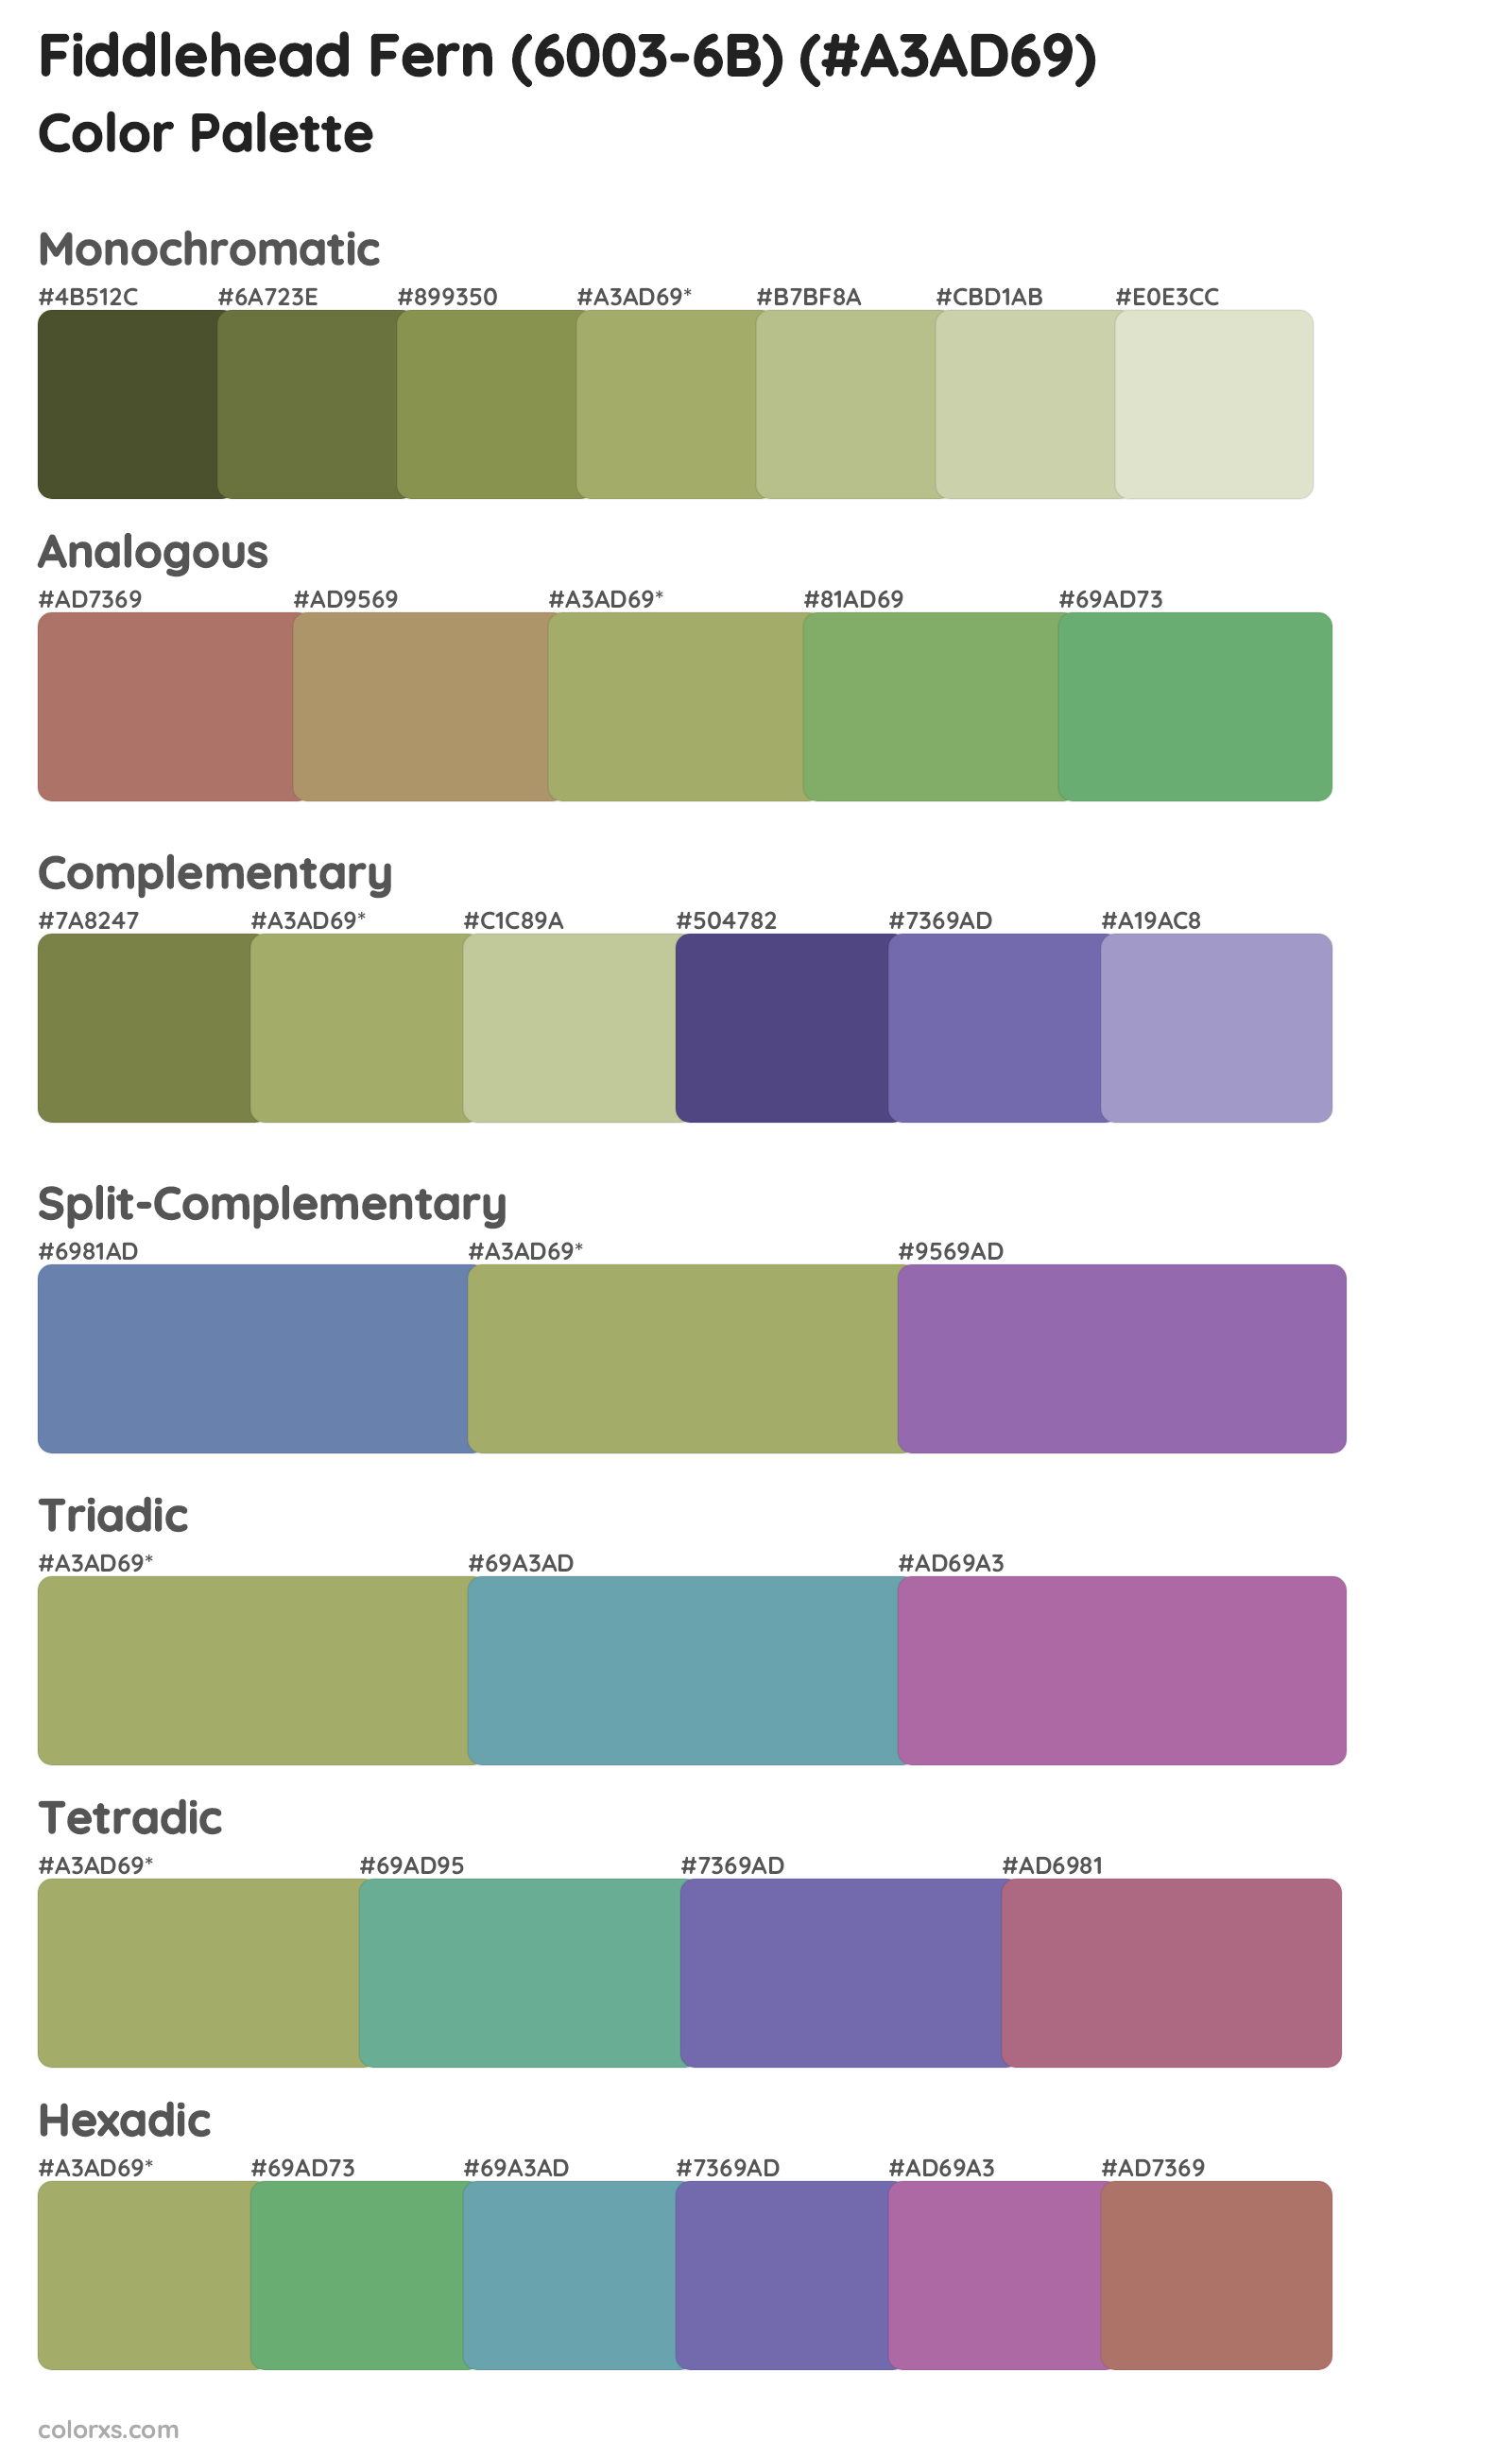 Fiddlehead Fern (6003-6B) Color Scheme Palettes